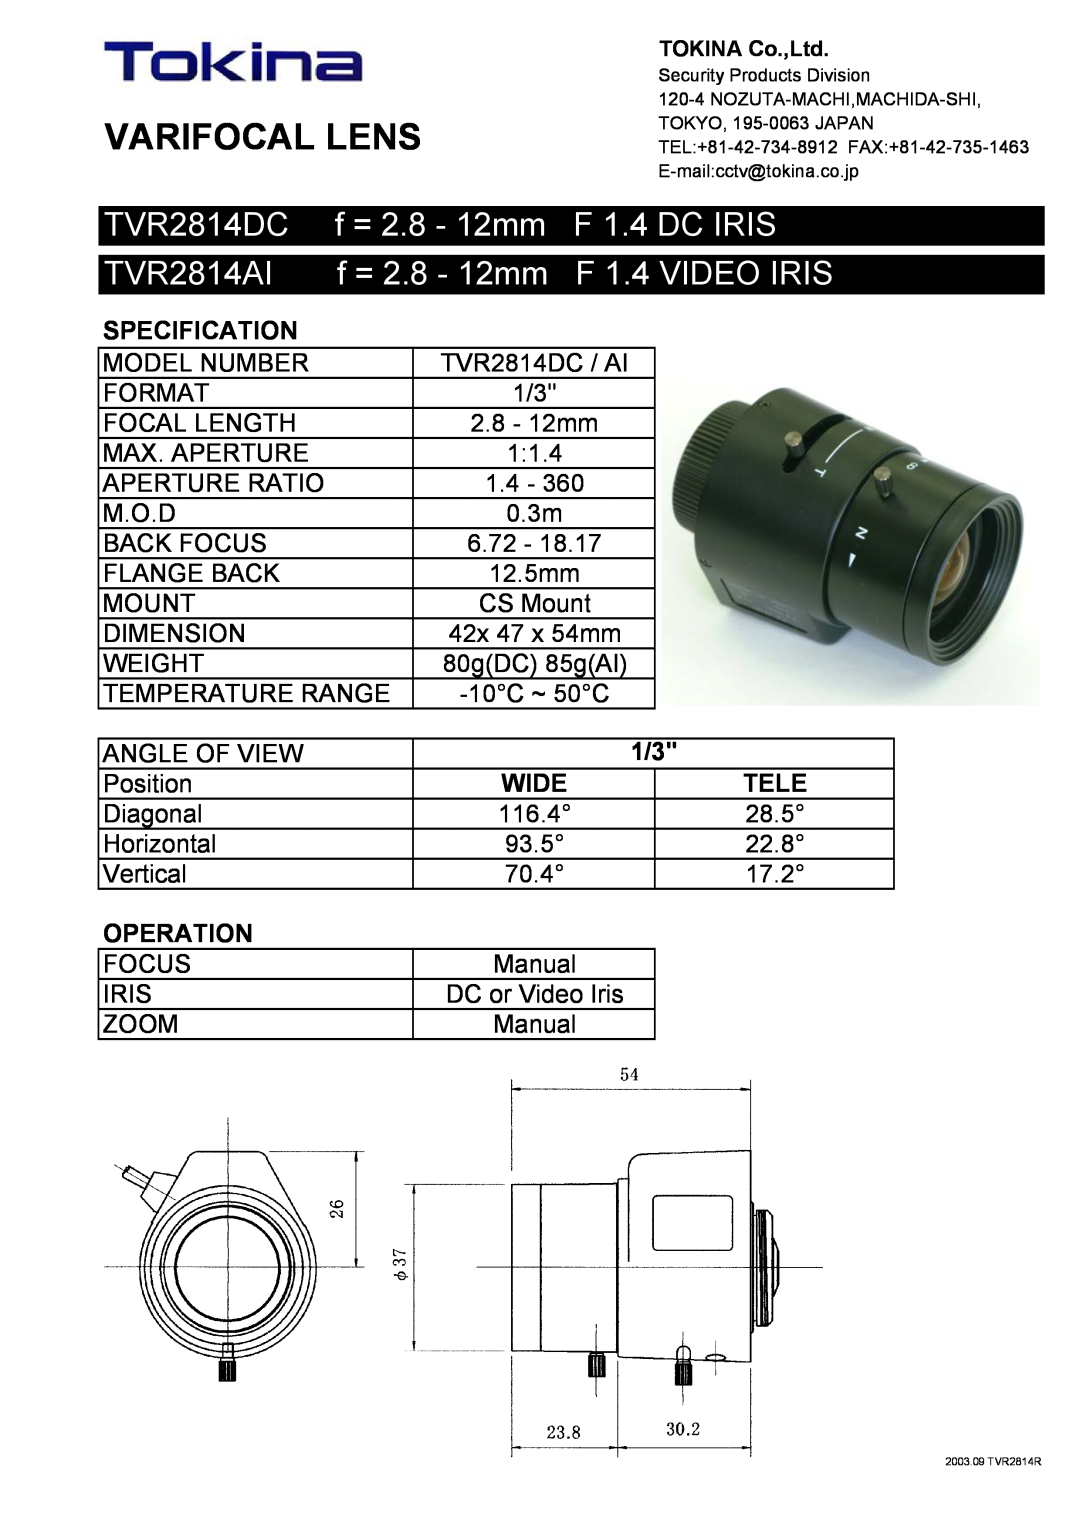 Tokina TVR2814DC / AI manual Varifocal Lens, F 1.4 DC IRIS, TVR2814AI, f = 2.8 - 12mm F 1.4 VIDEO IRIS, Specification 